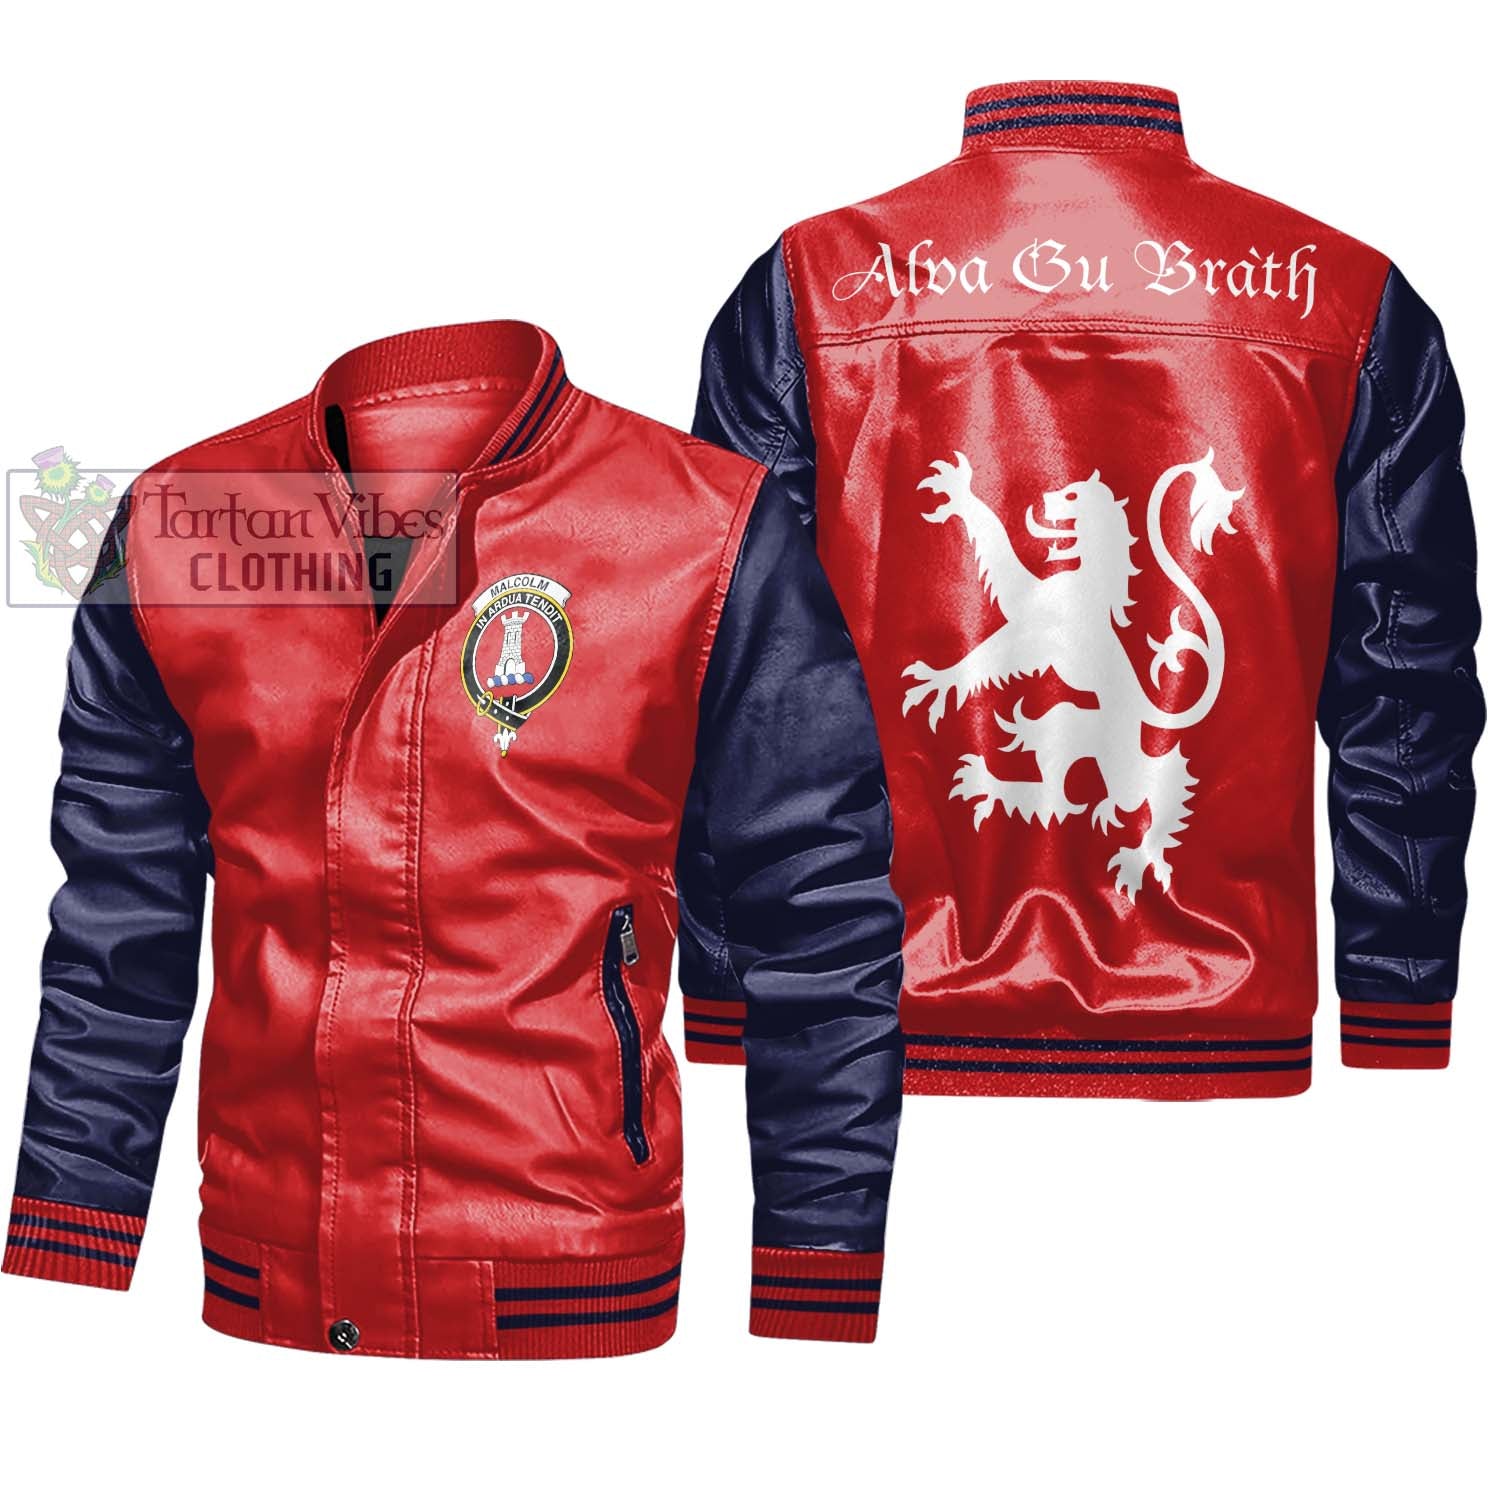 Tartan Vibes Clothing Malcolm Family Crest Leather Bomber Jacket Lion Rampant Alba Gu Brath Style